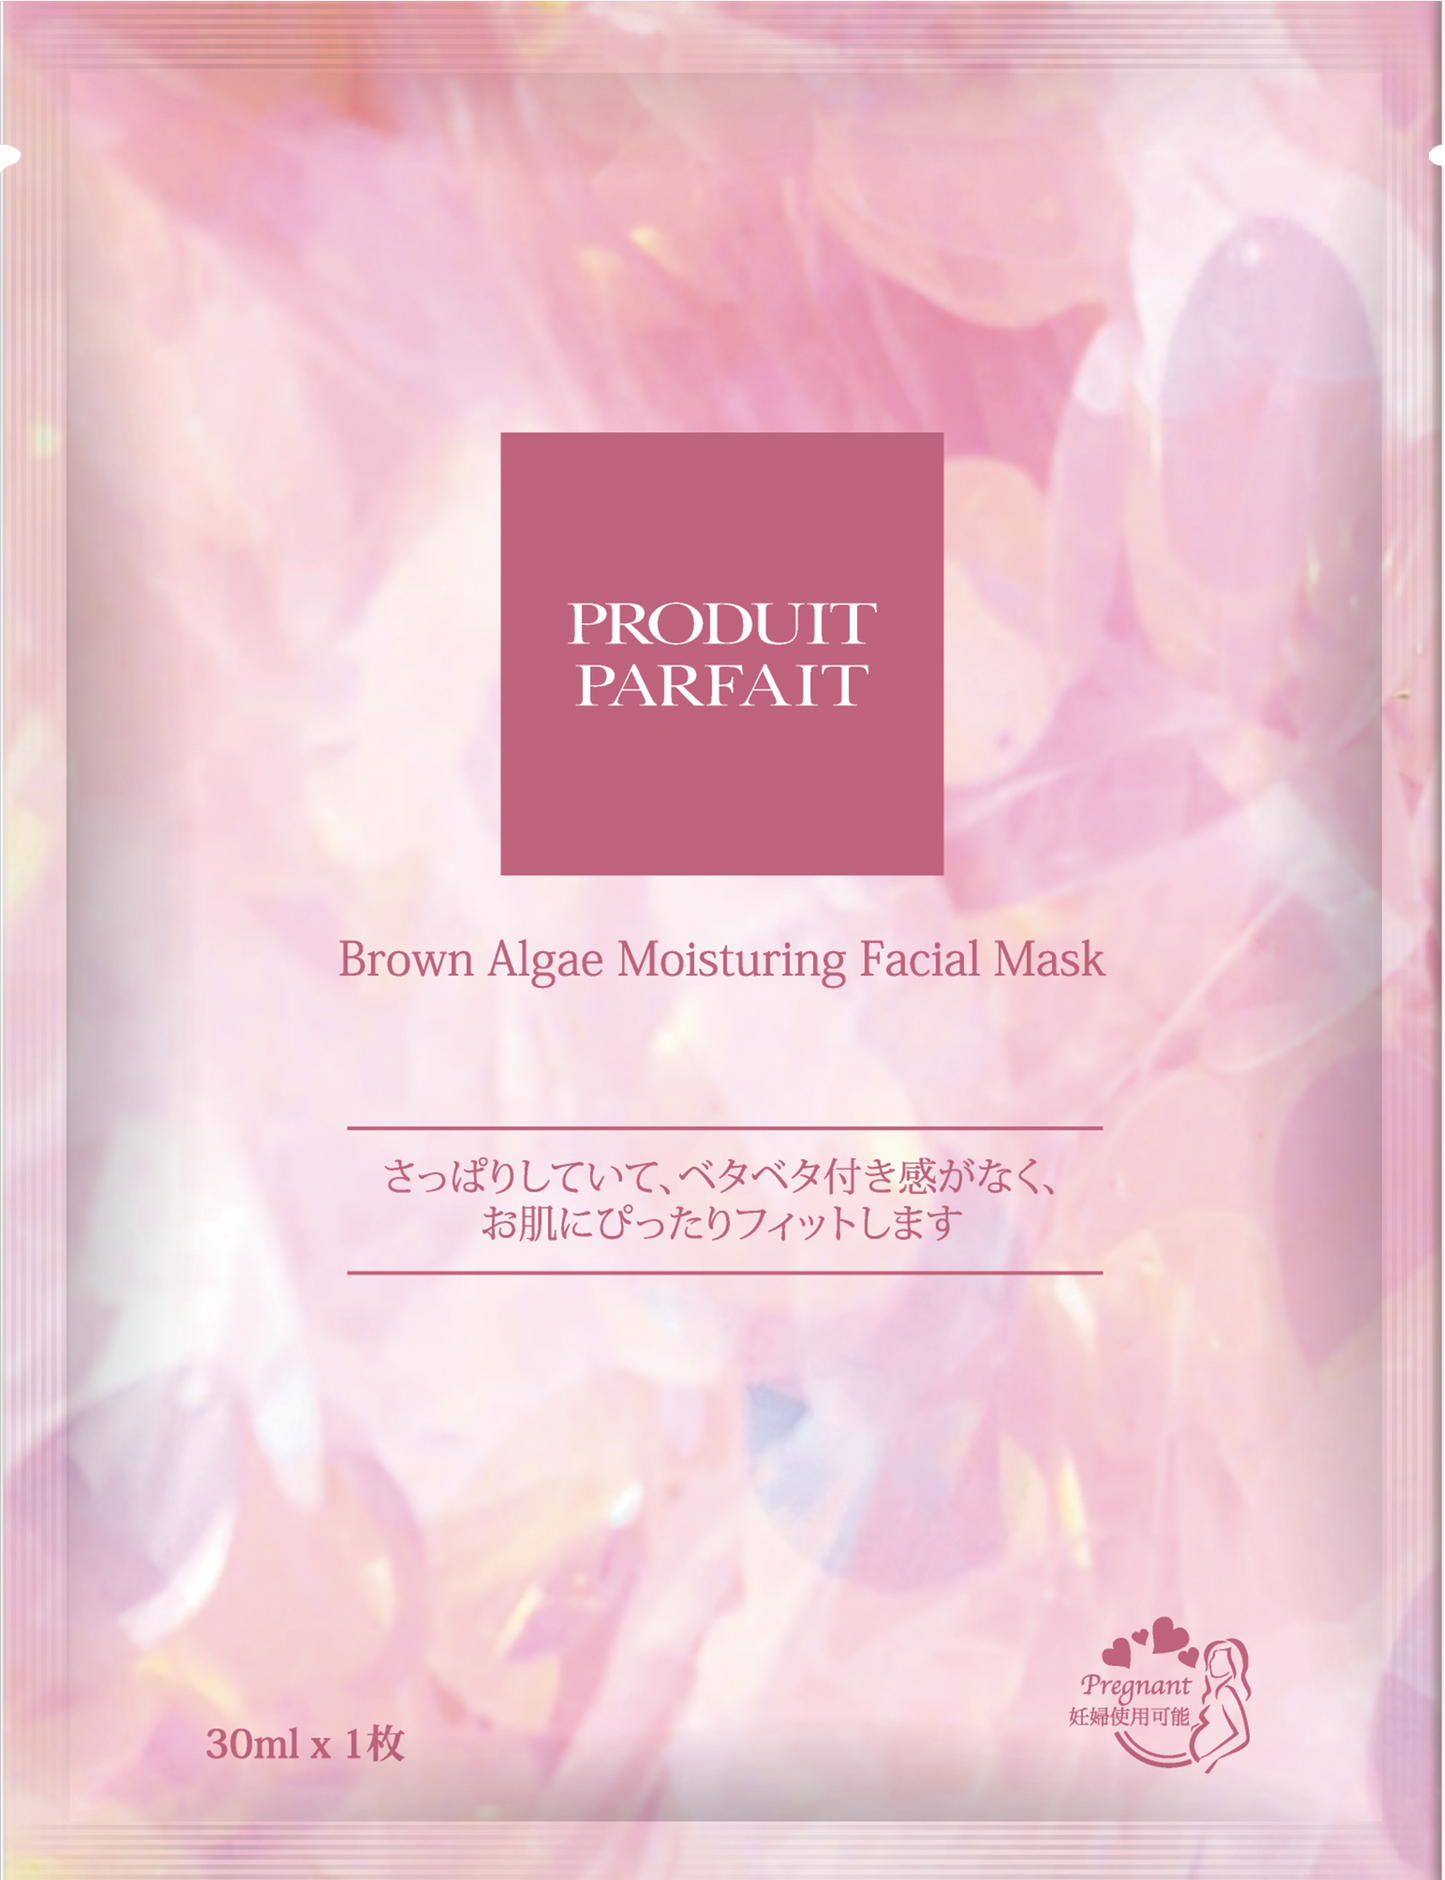 Brown Algae Moisturizing Facial Mask